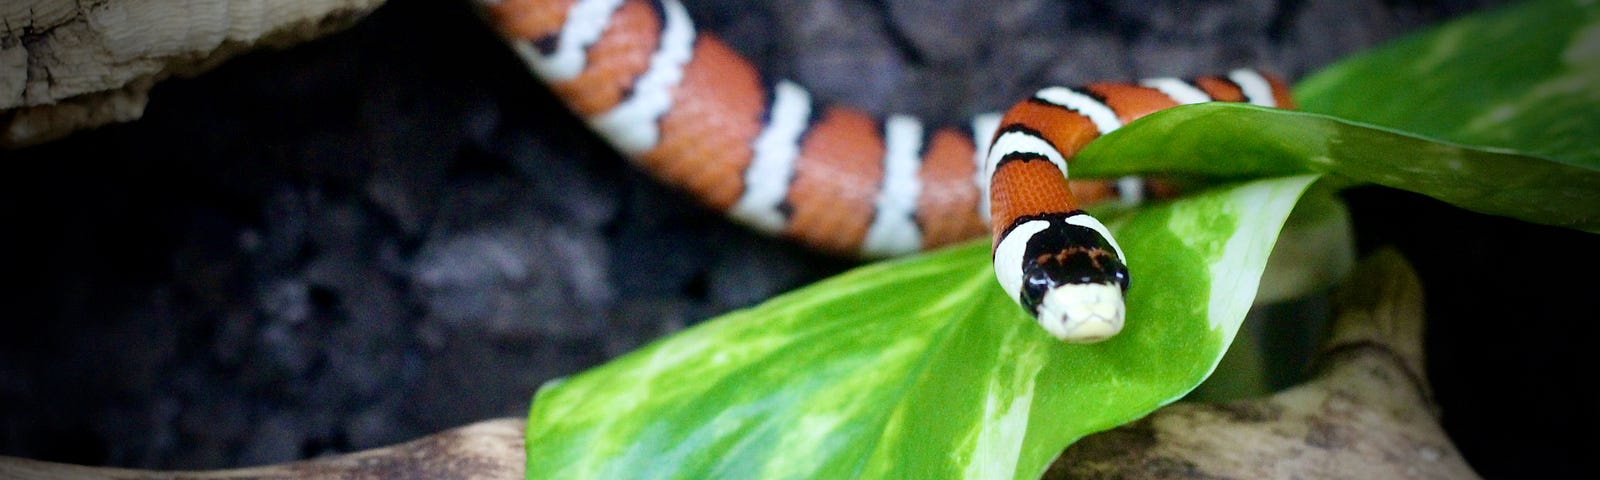 Striped orange, white and black snake, its head resting on leaf